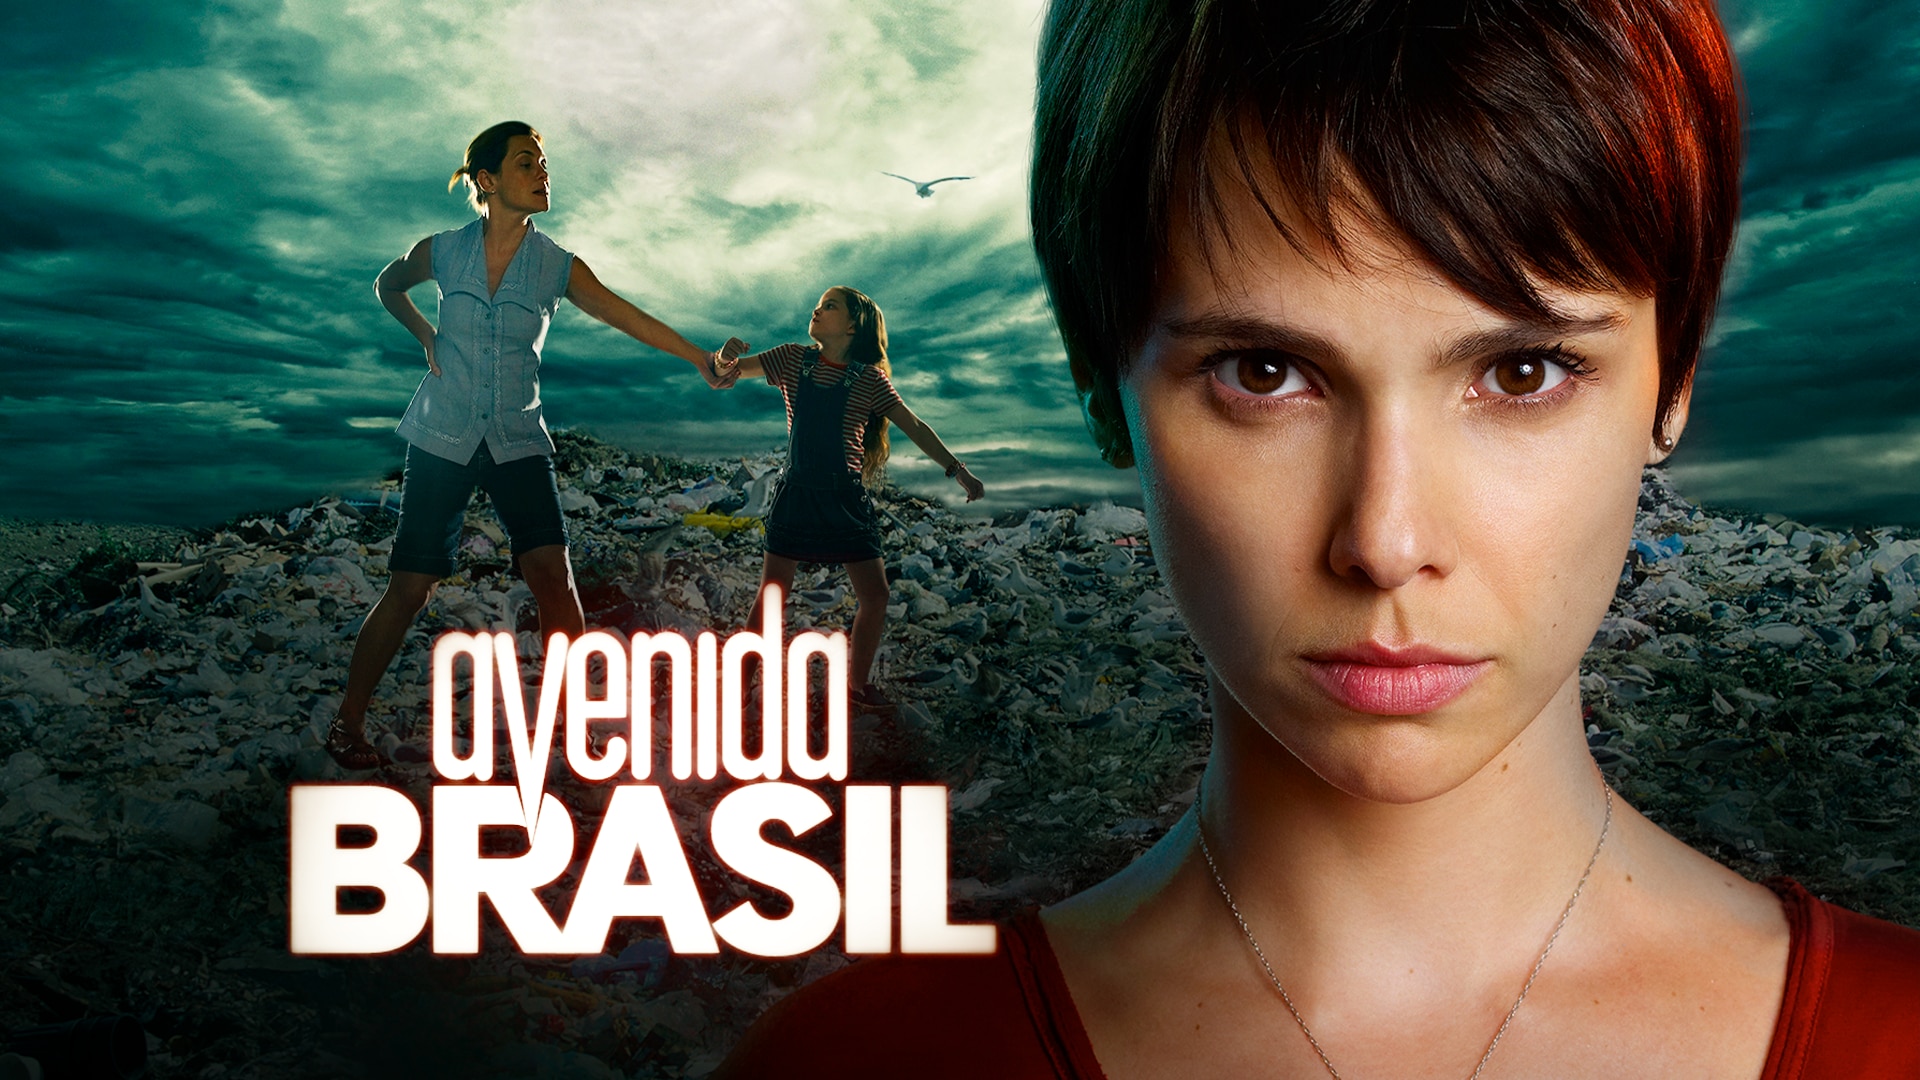 Brazil Avenue - Ver la serie de tv online